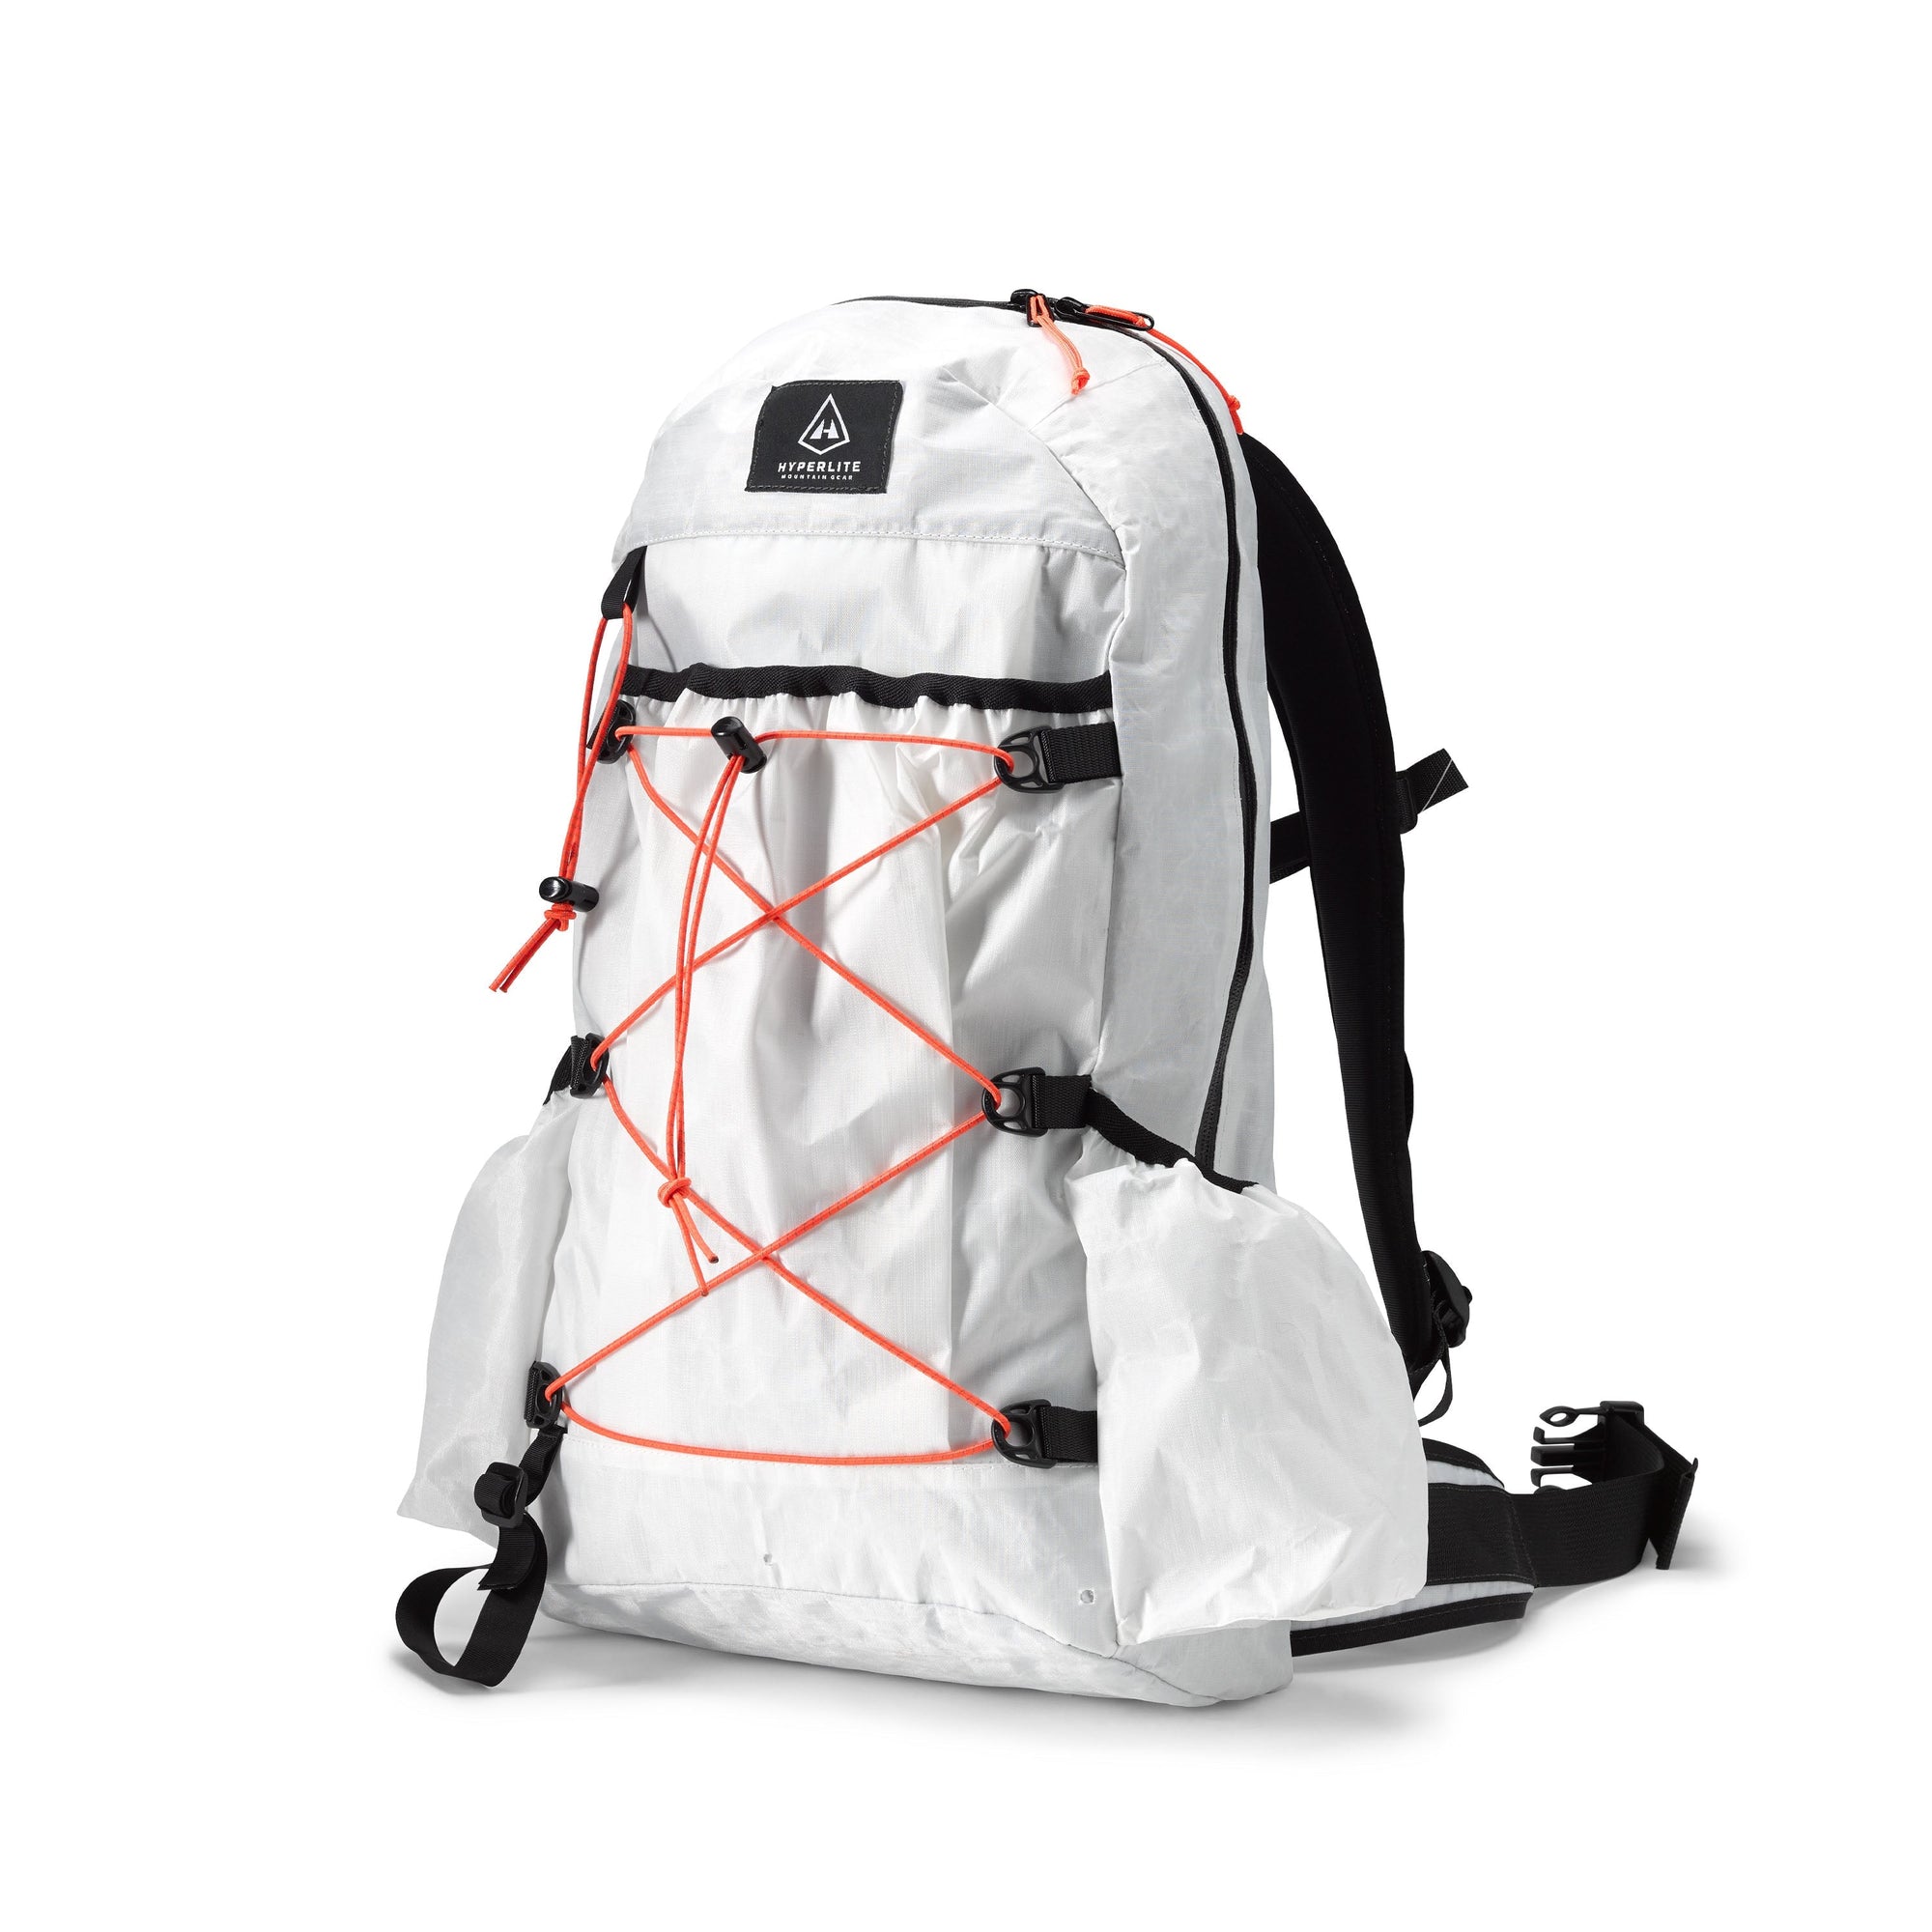 Ultralight Backpacks - Made with Dyneema